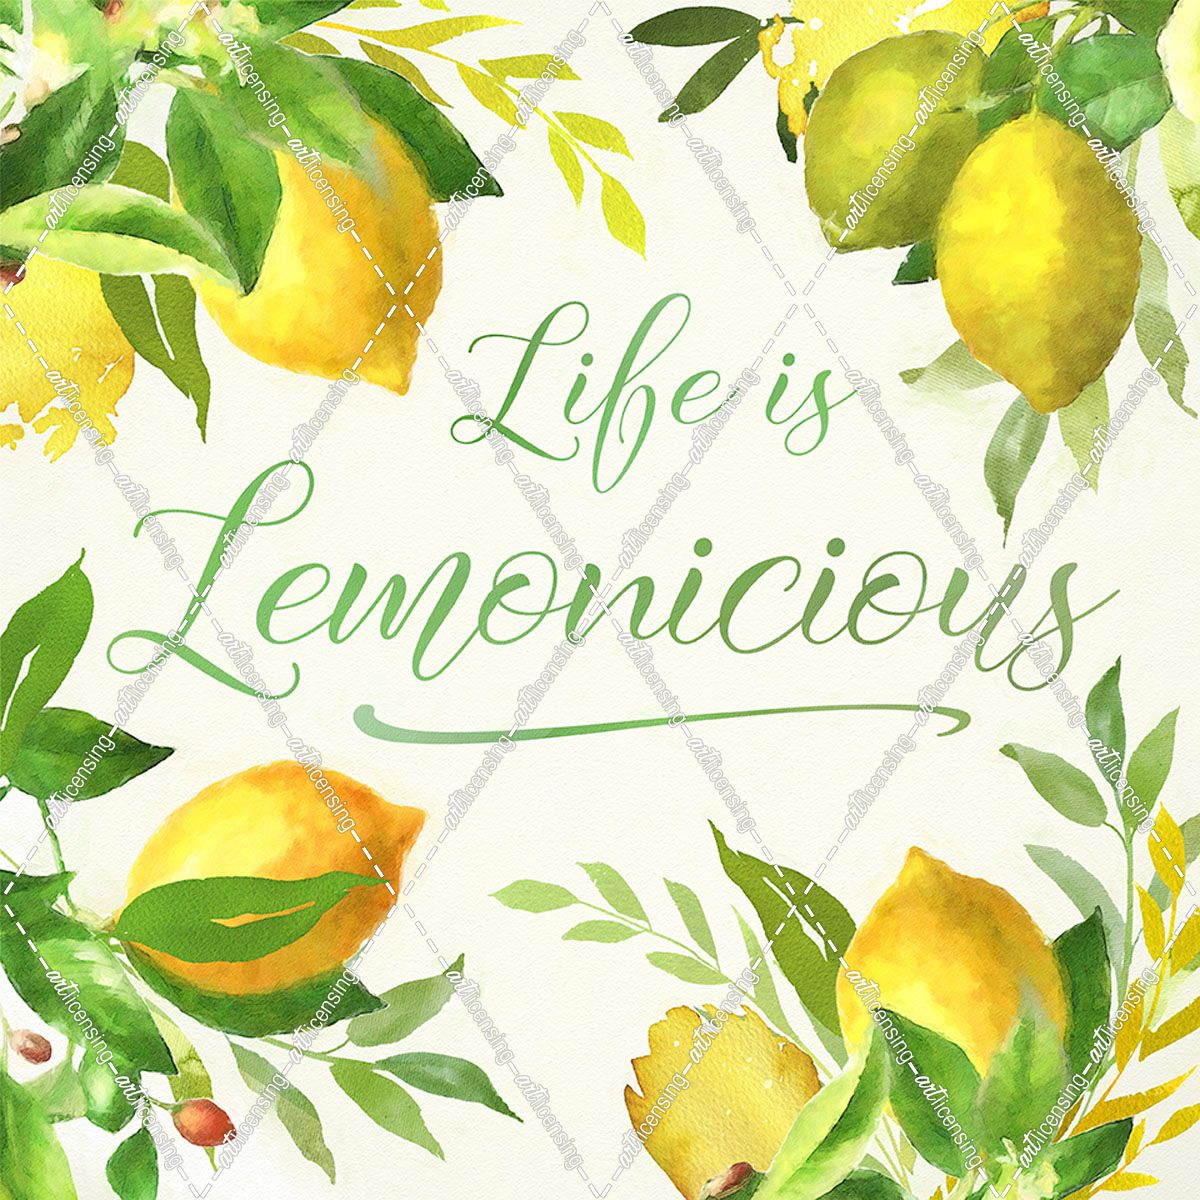 Life is Lemonicious